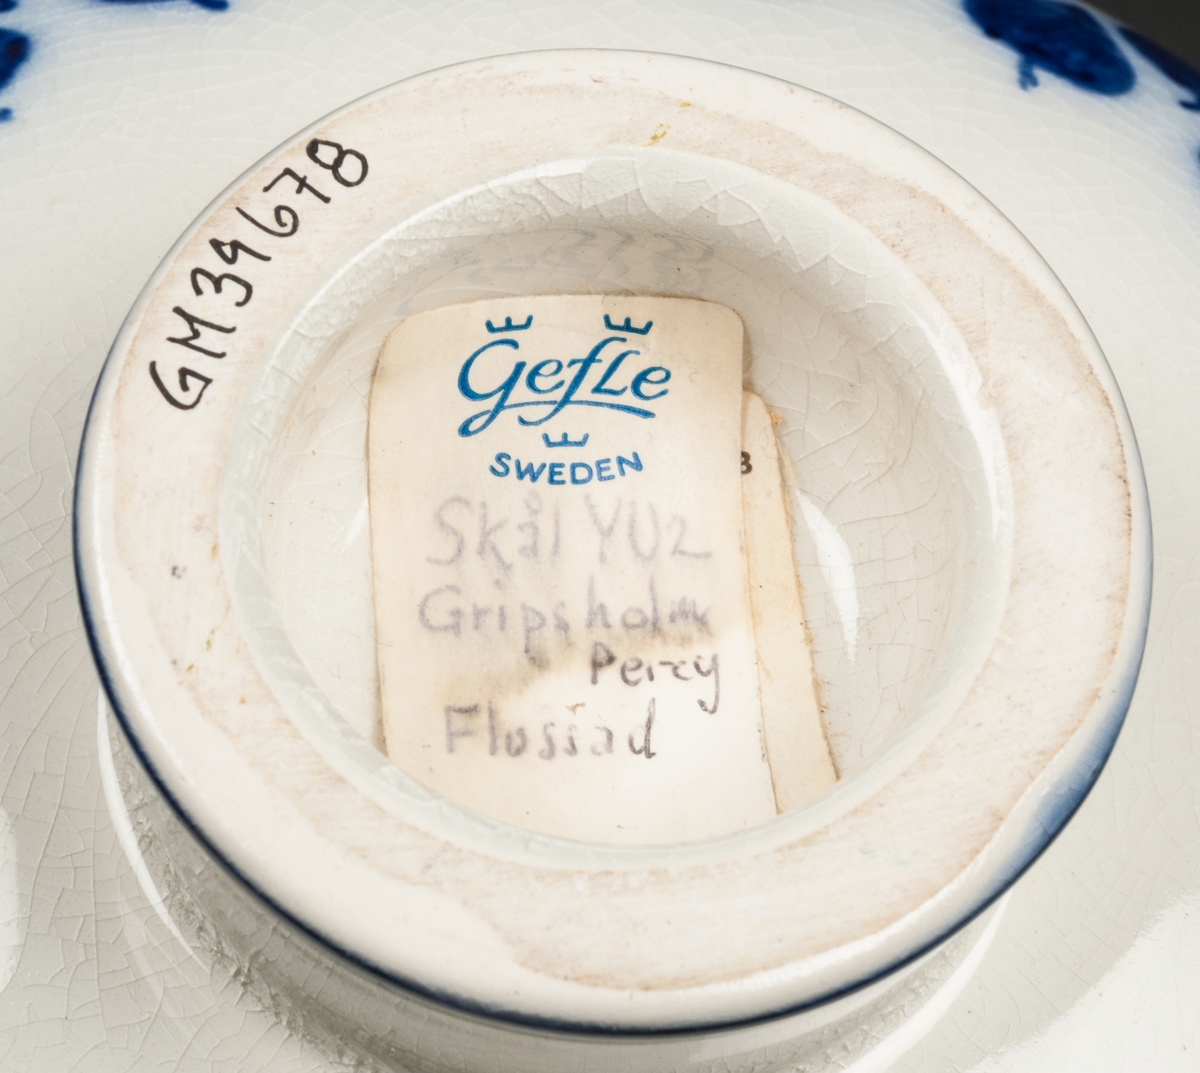 Skål på liten fot. Målade blå blad i glasyren, mot vit botten.
Etikett: Modell YU2. Gripsholm, Percy. Flossad.